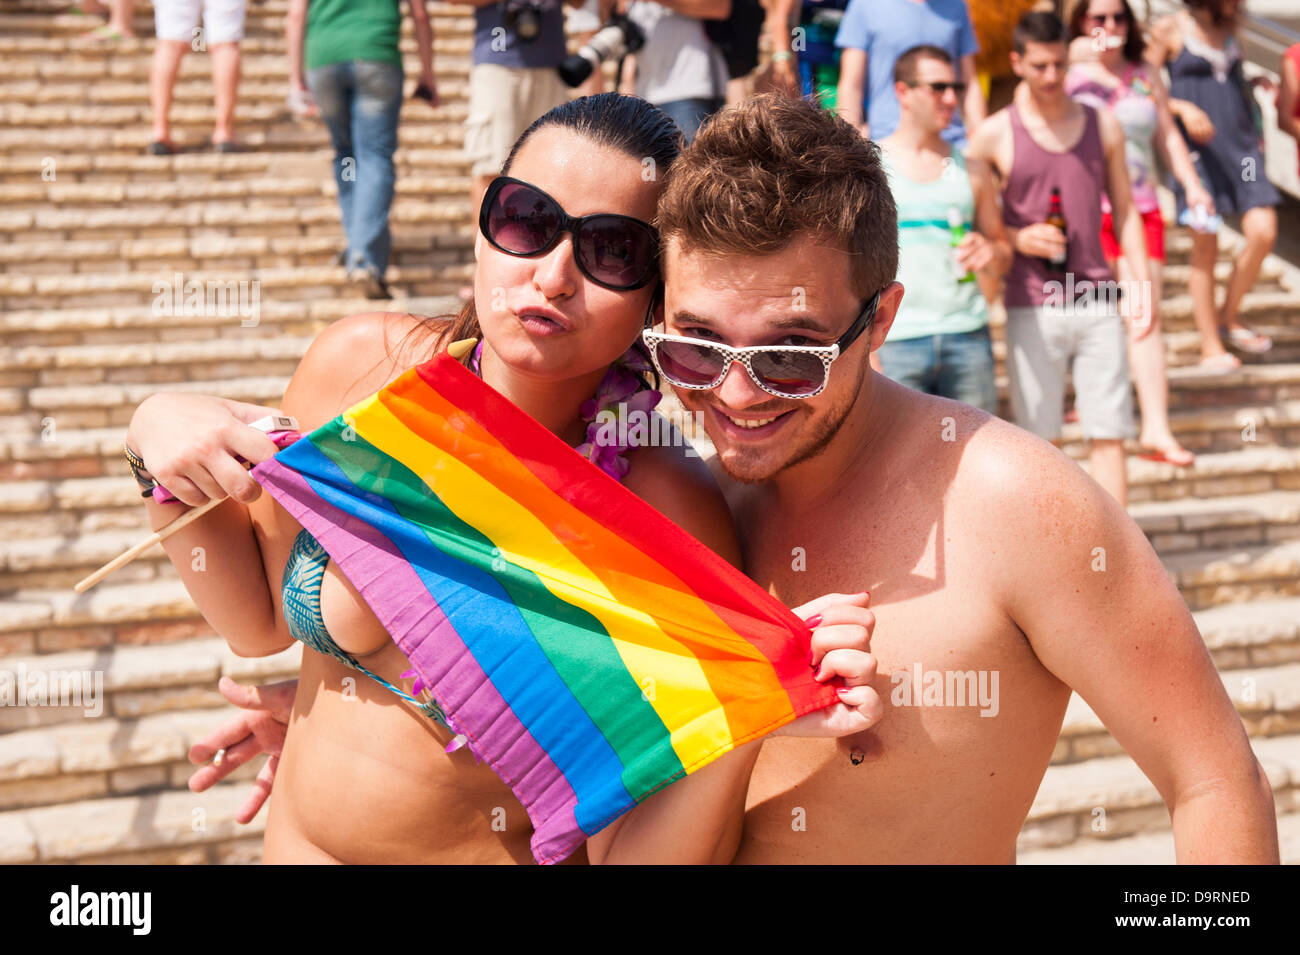 Israel Tel Aviv Gay Pride Gordon Beach by sea seaside Party couple goers revelers flag Rainbow LGBT colours colors Stock Photo